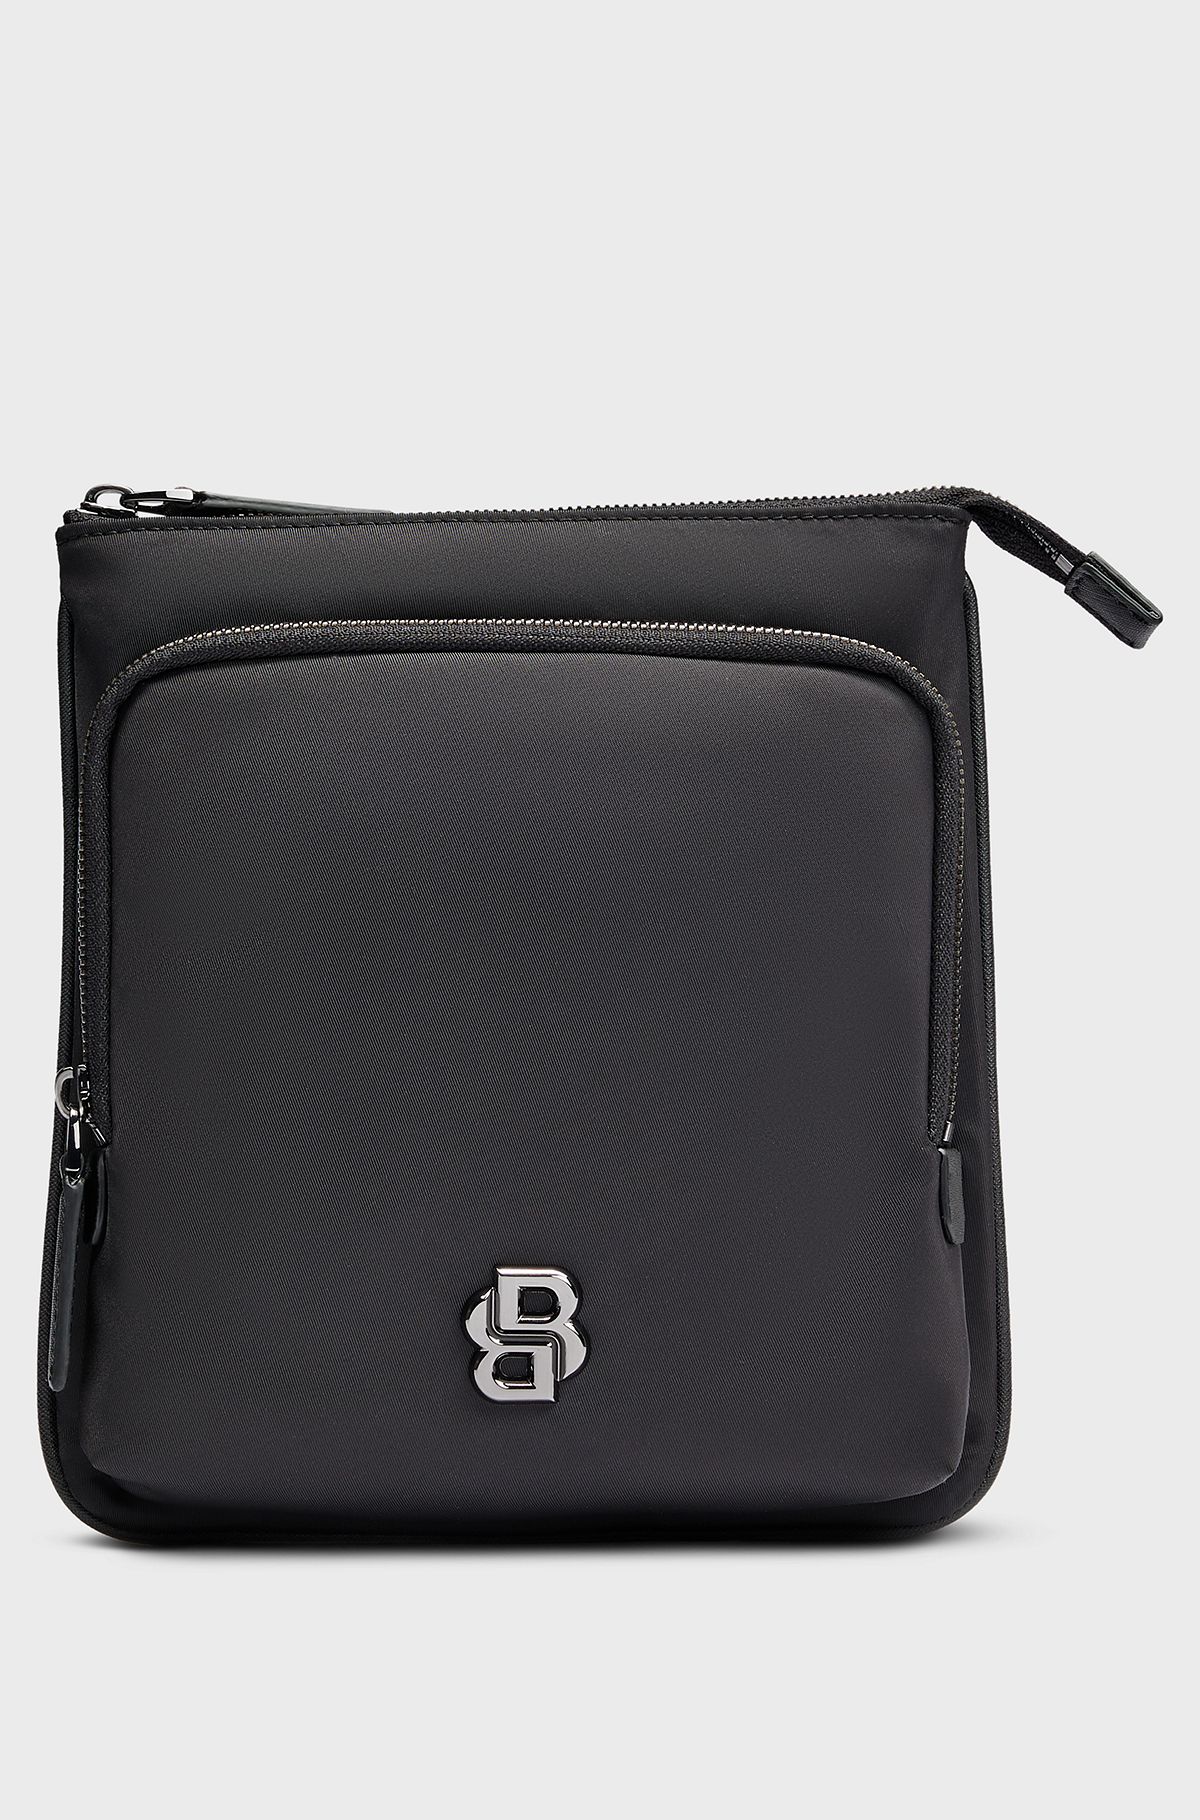 Envelope bag with double-monogram hardware trim, Black